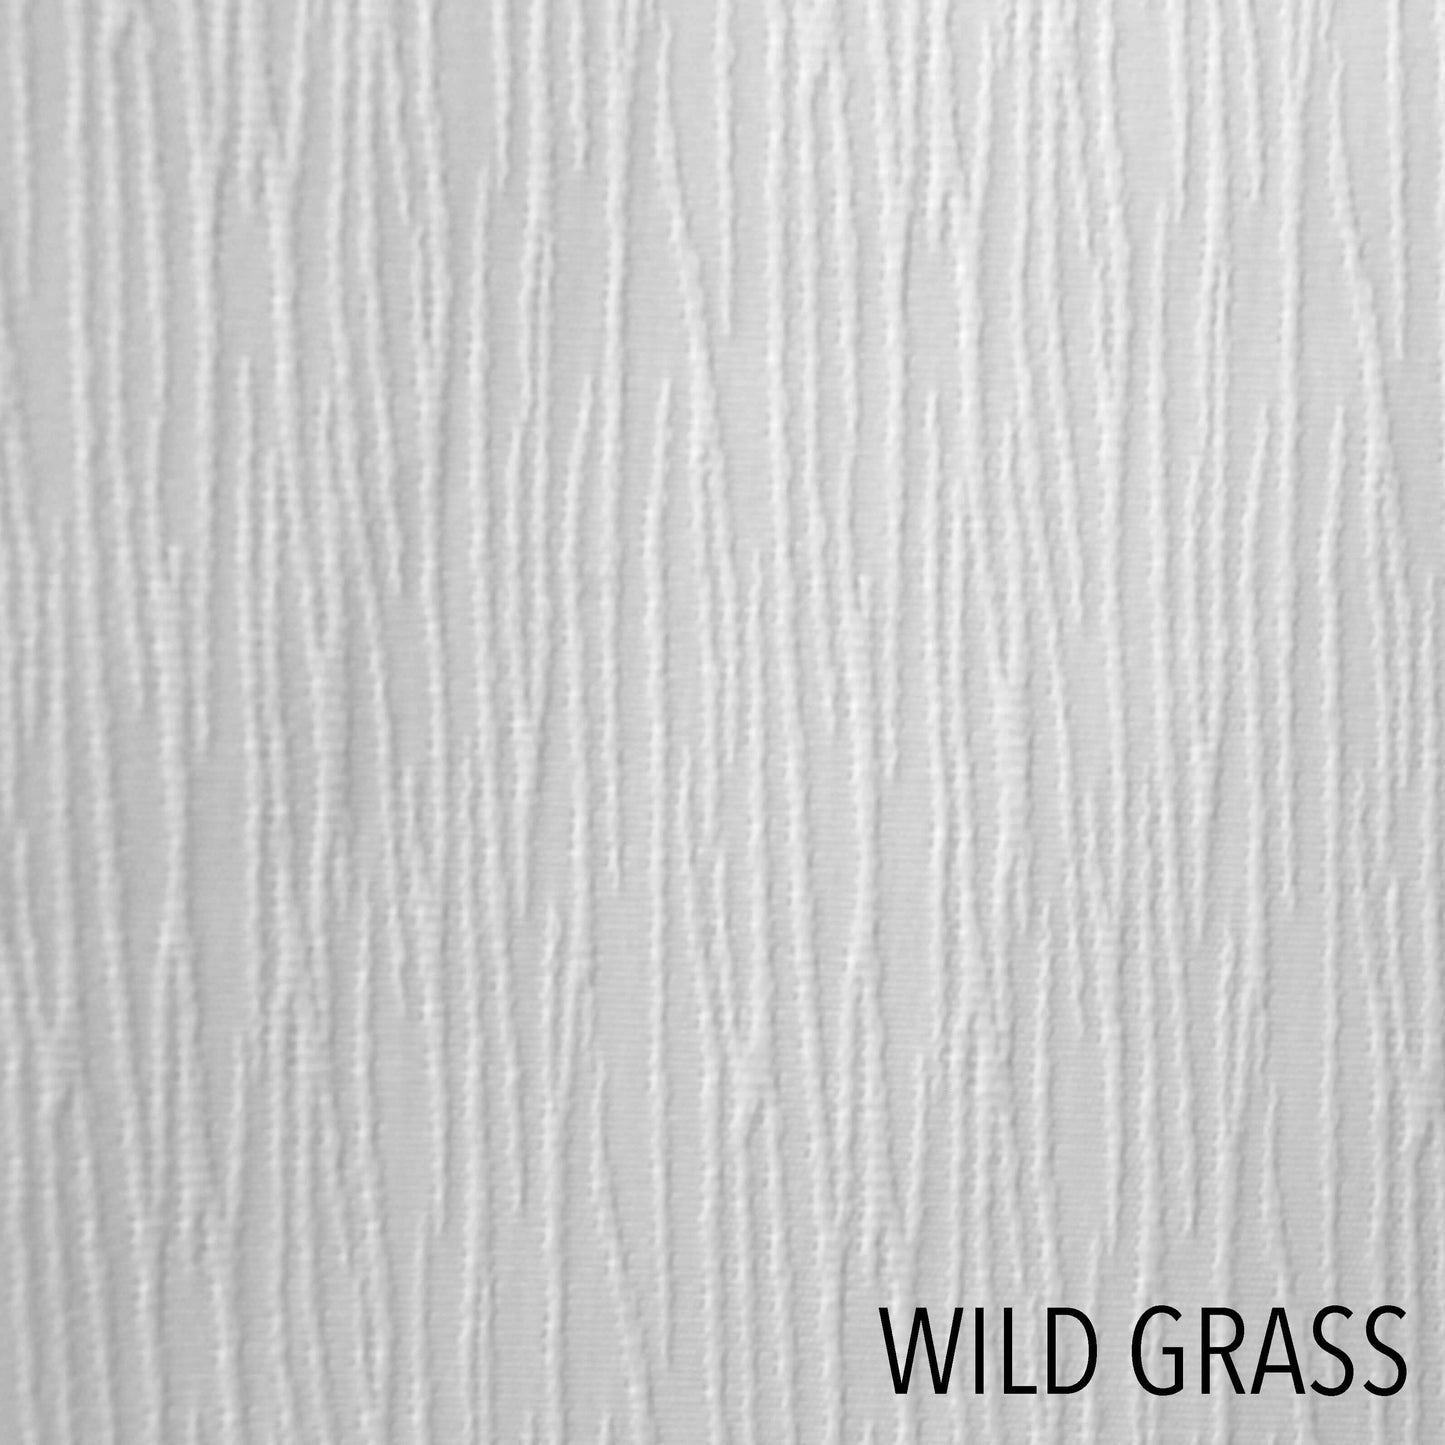 Quality Wild Grass Decorative Top Sheet